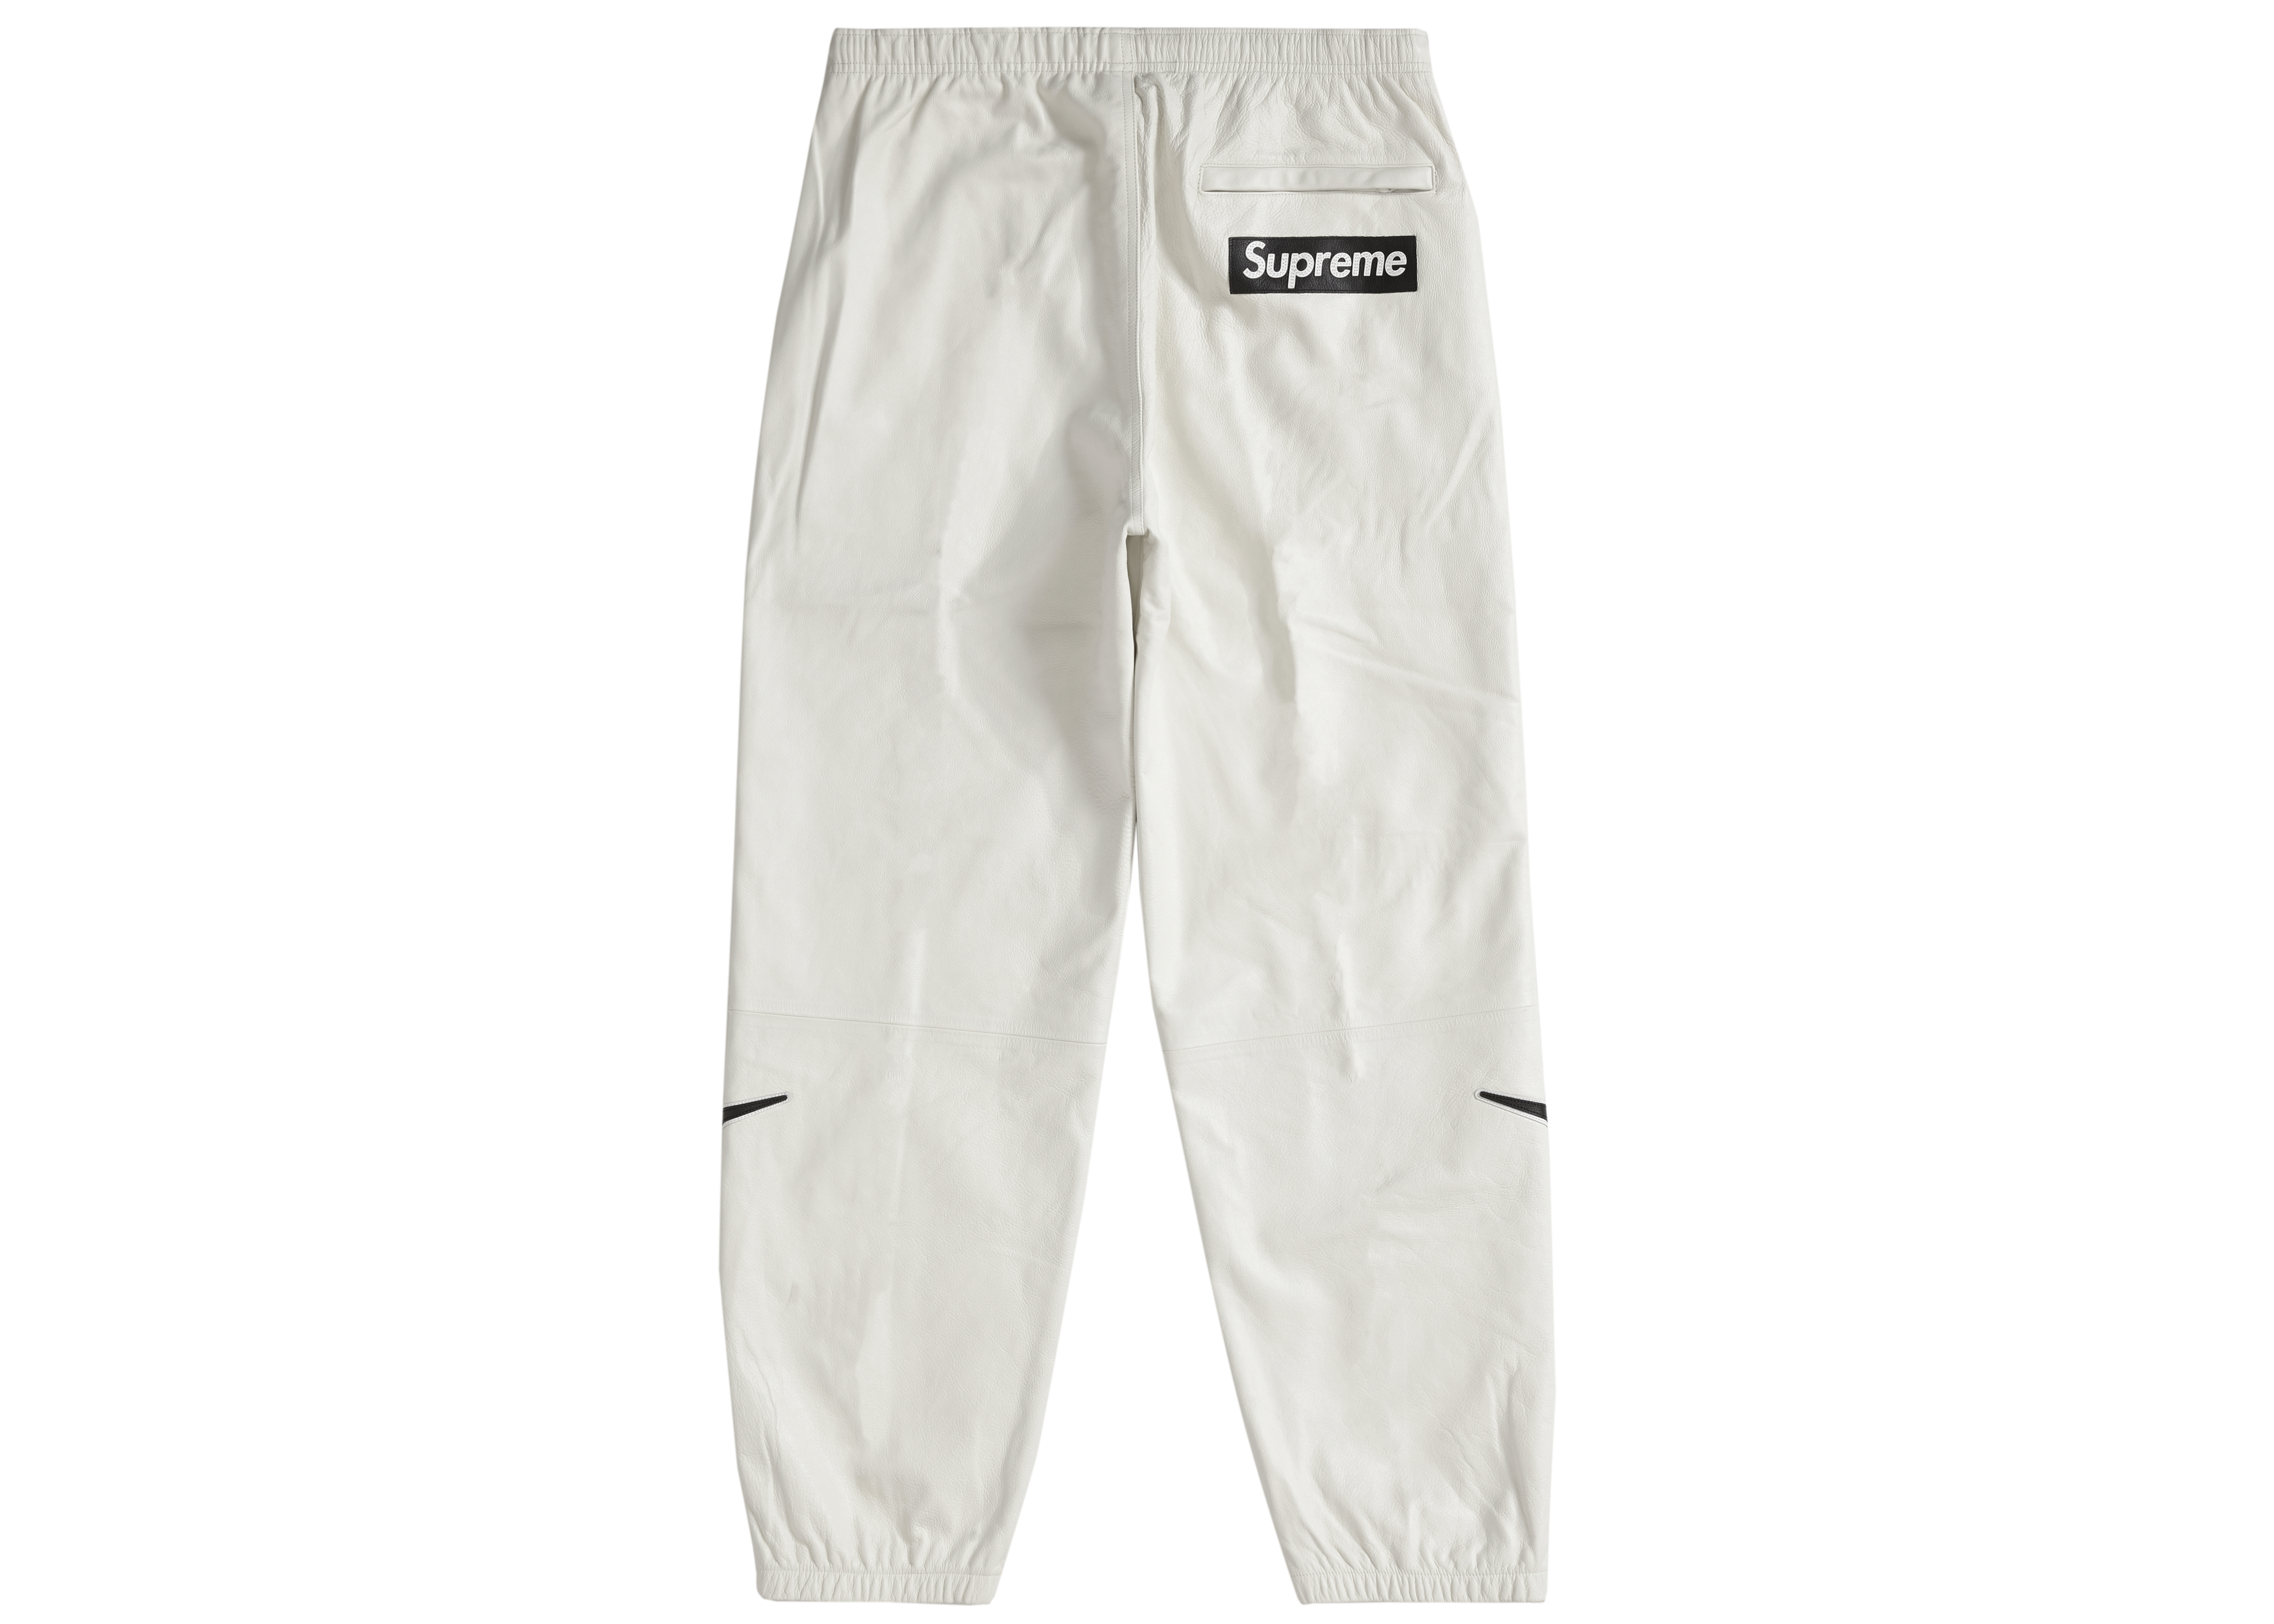 Supreme x Nike Leather Warm Up Pant White - Novelship